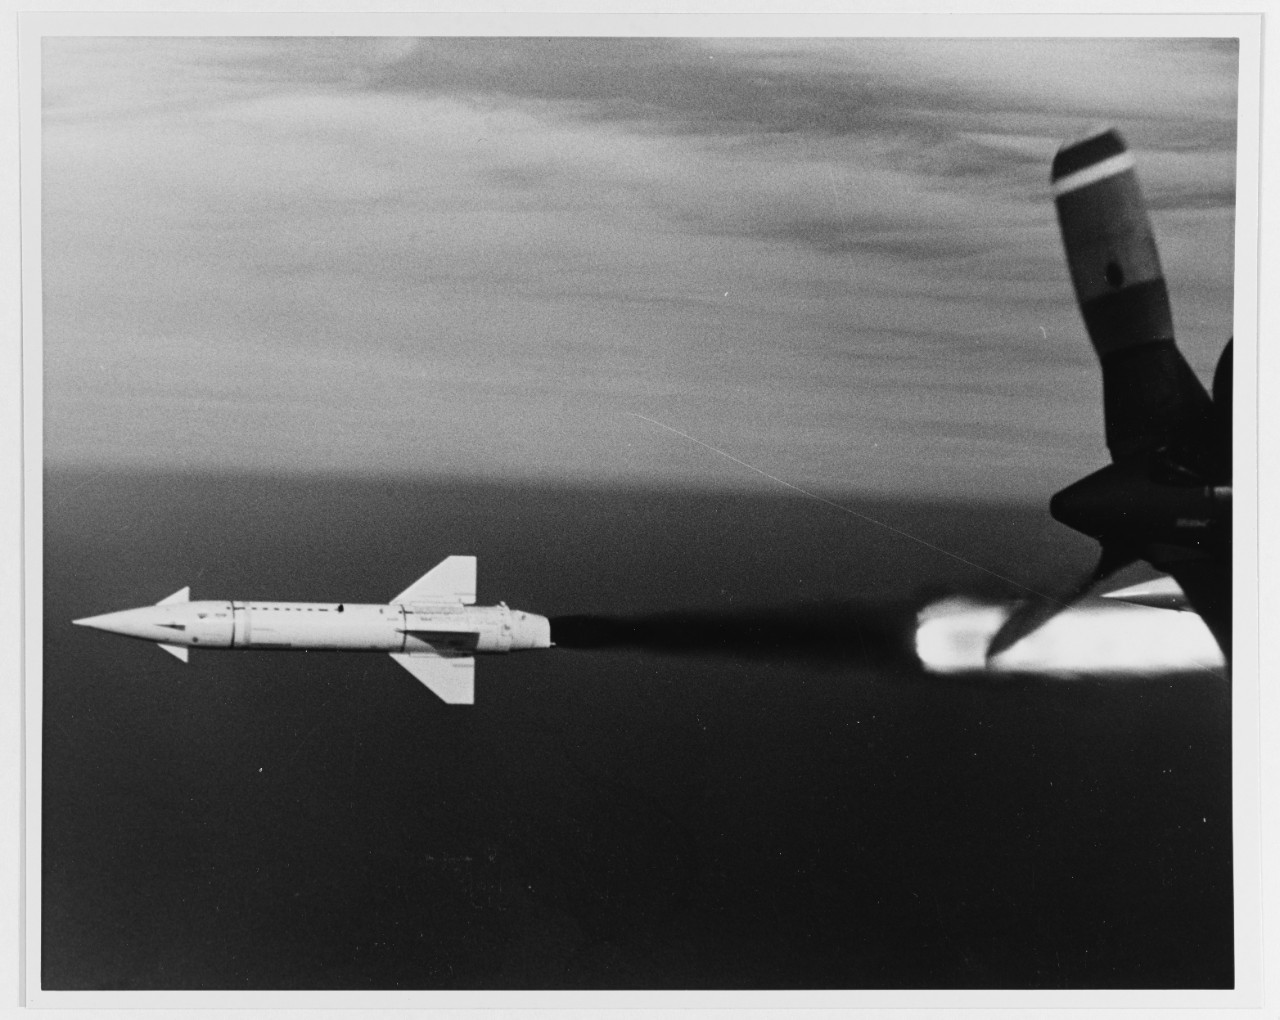 AGM-12 Bullpup Missile